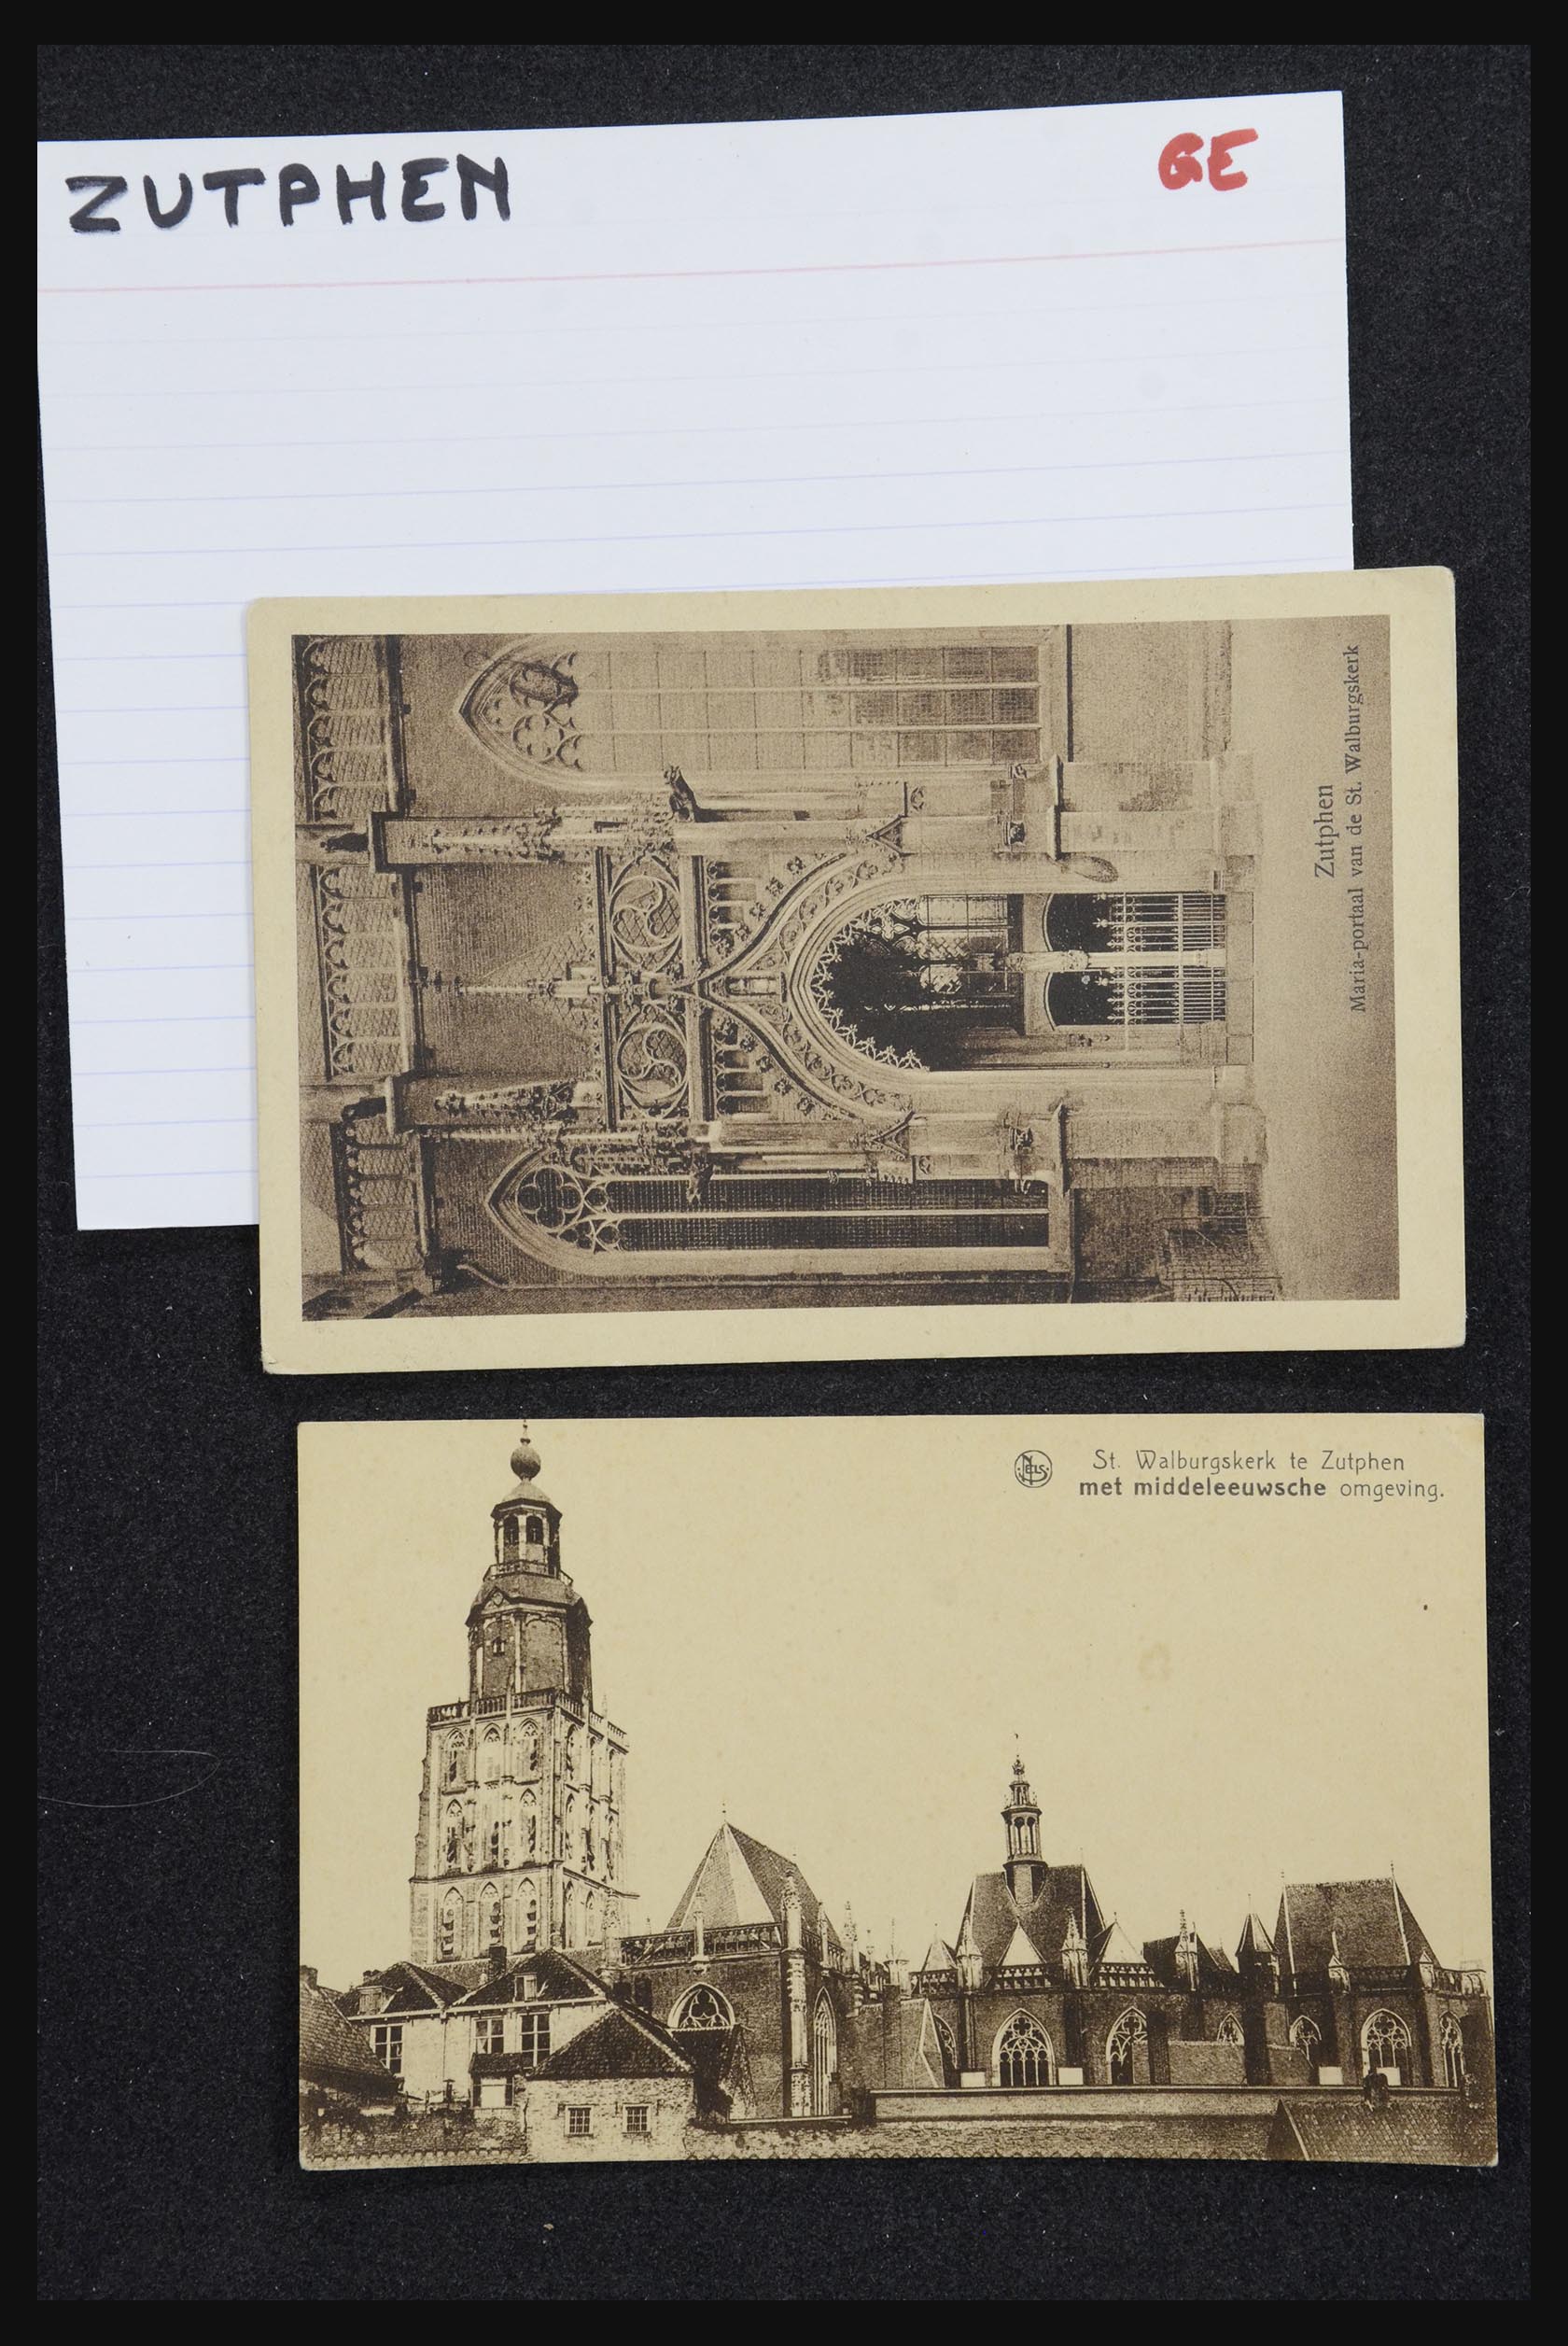 32408 944 - 32408 Netherlands picture postcards.